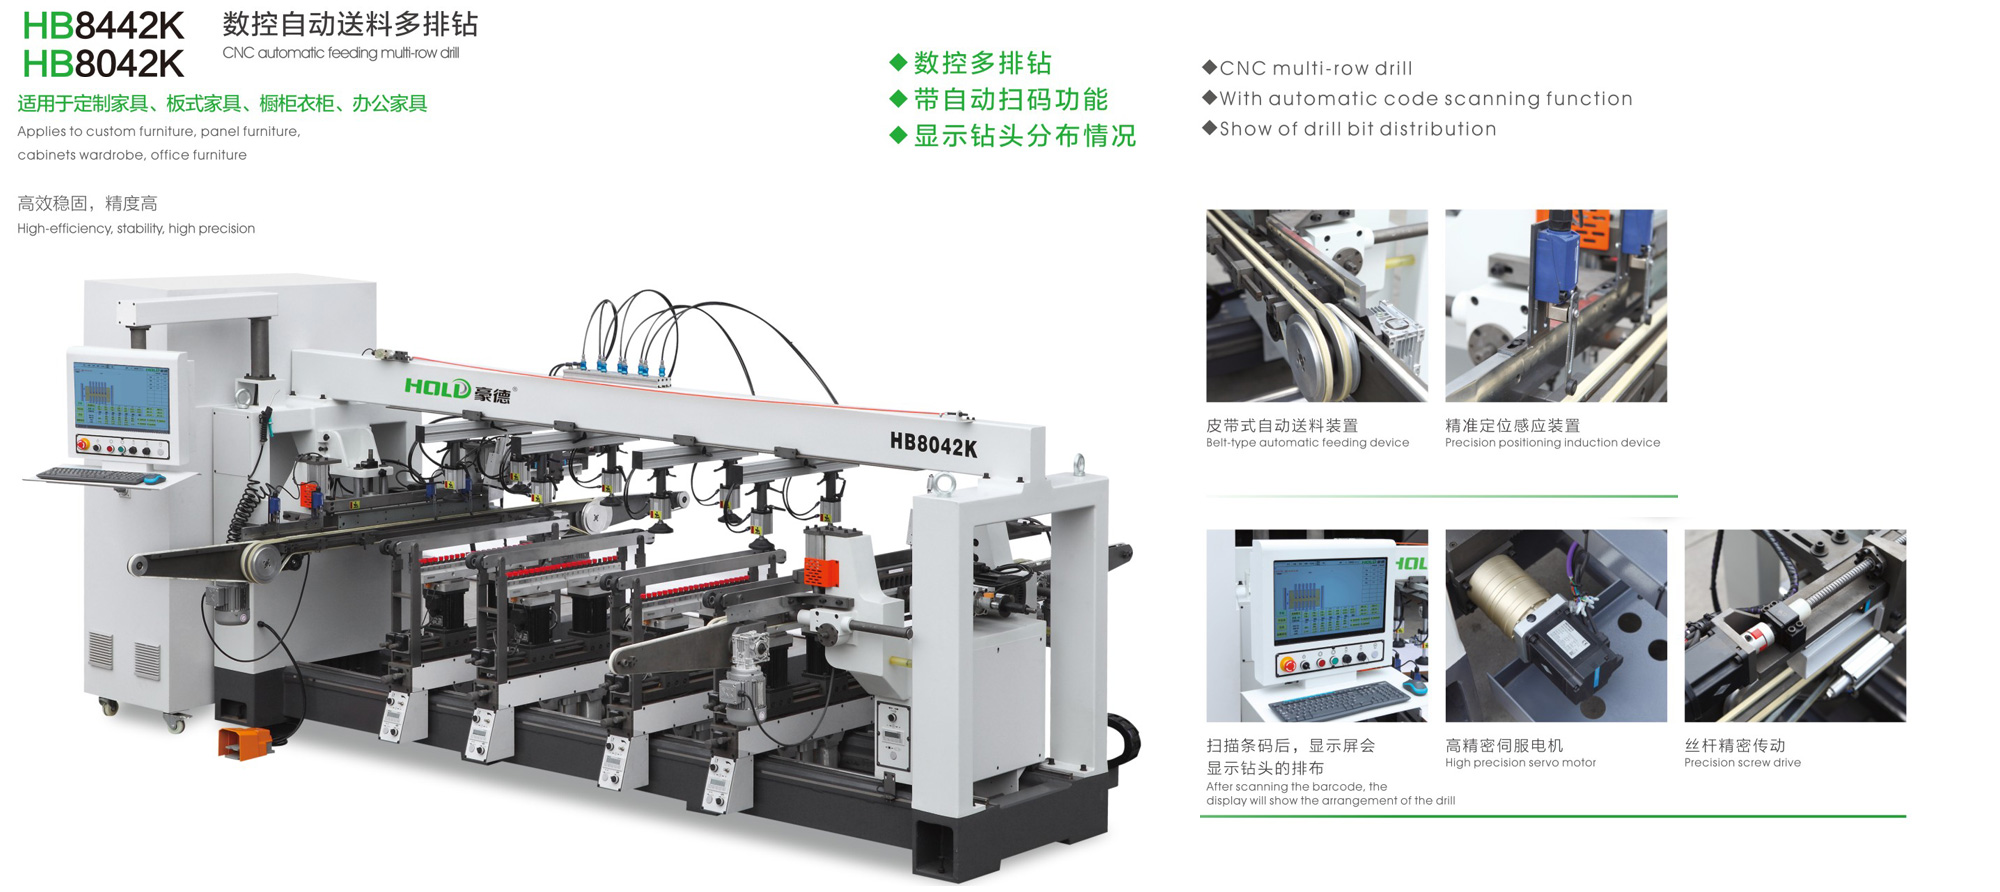 HB8442K/8042K CNC automatic feeding multti-row drill